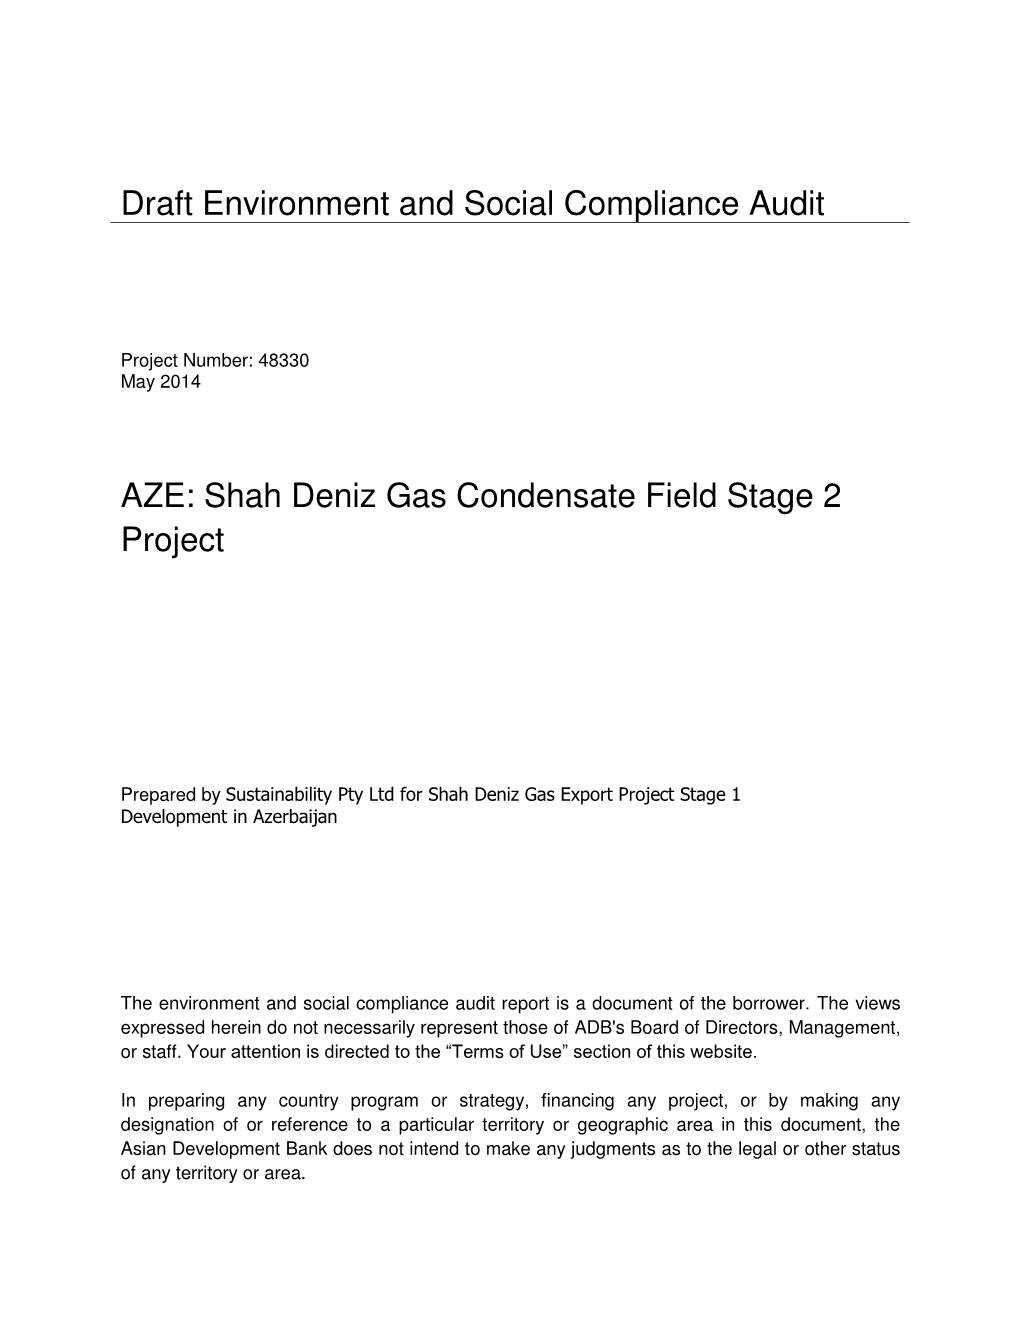 48330-001: AZE: Shah Deniz Stage II Gas Condensate Field Project